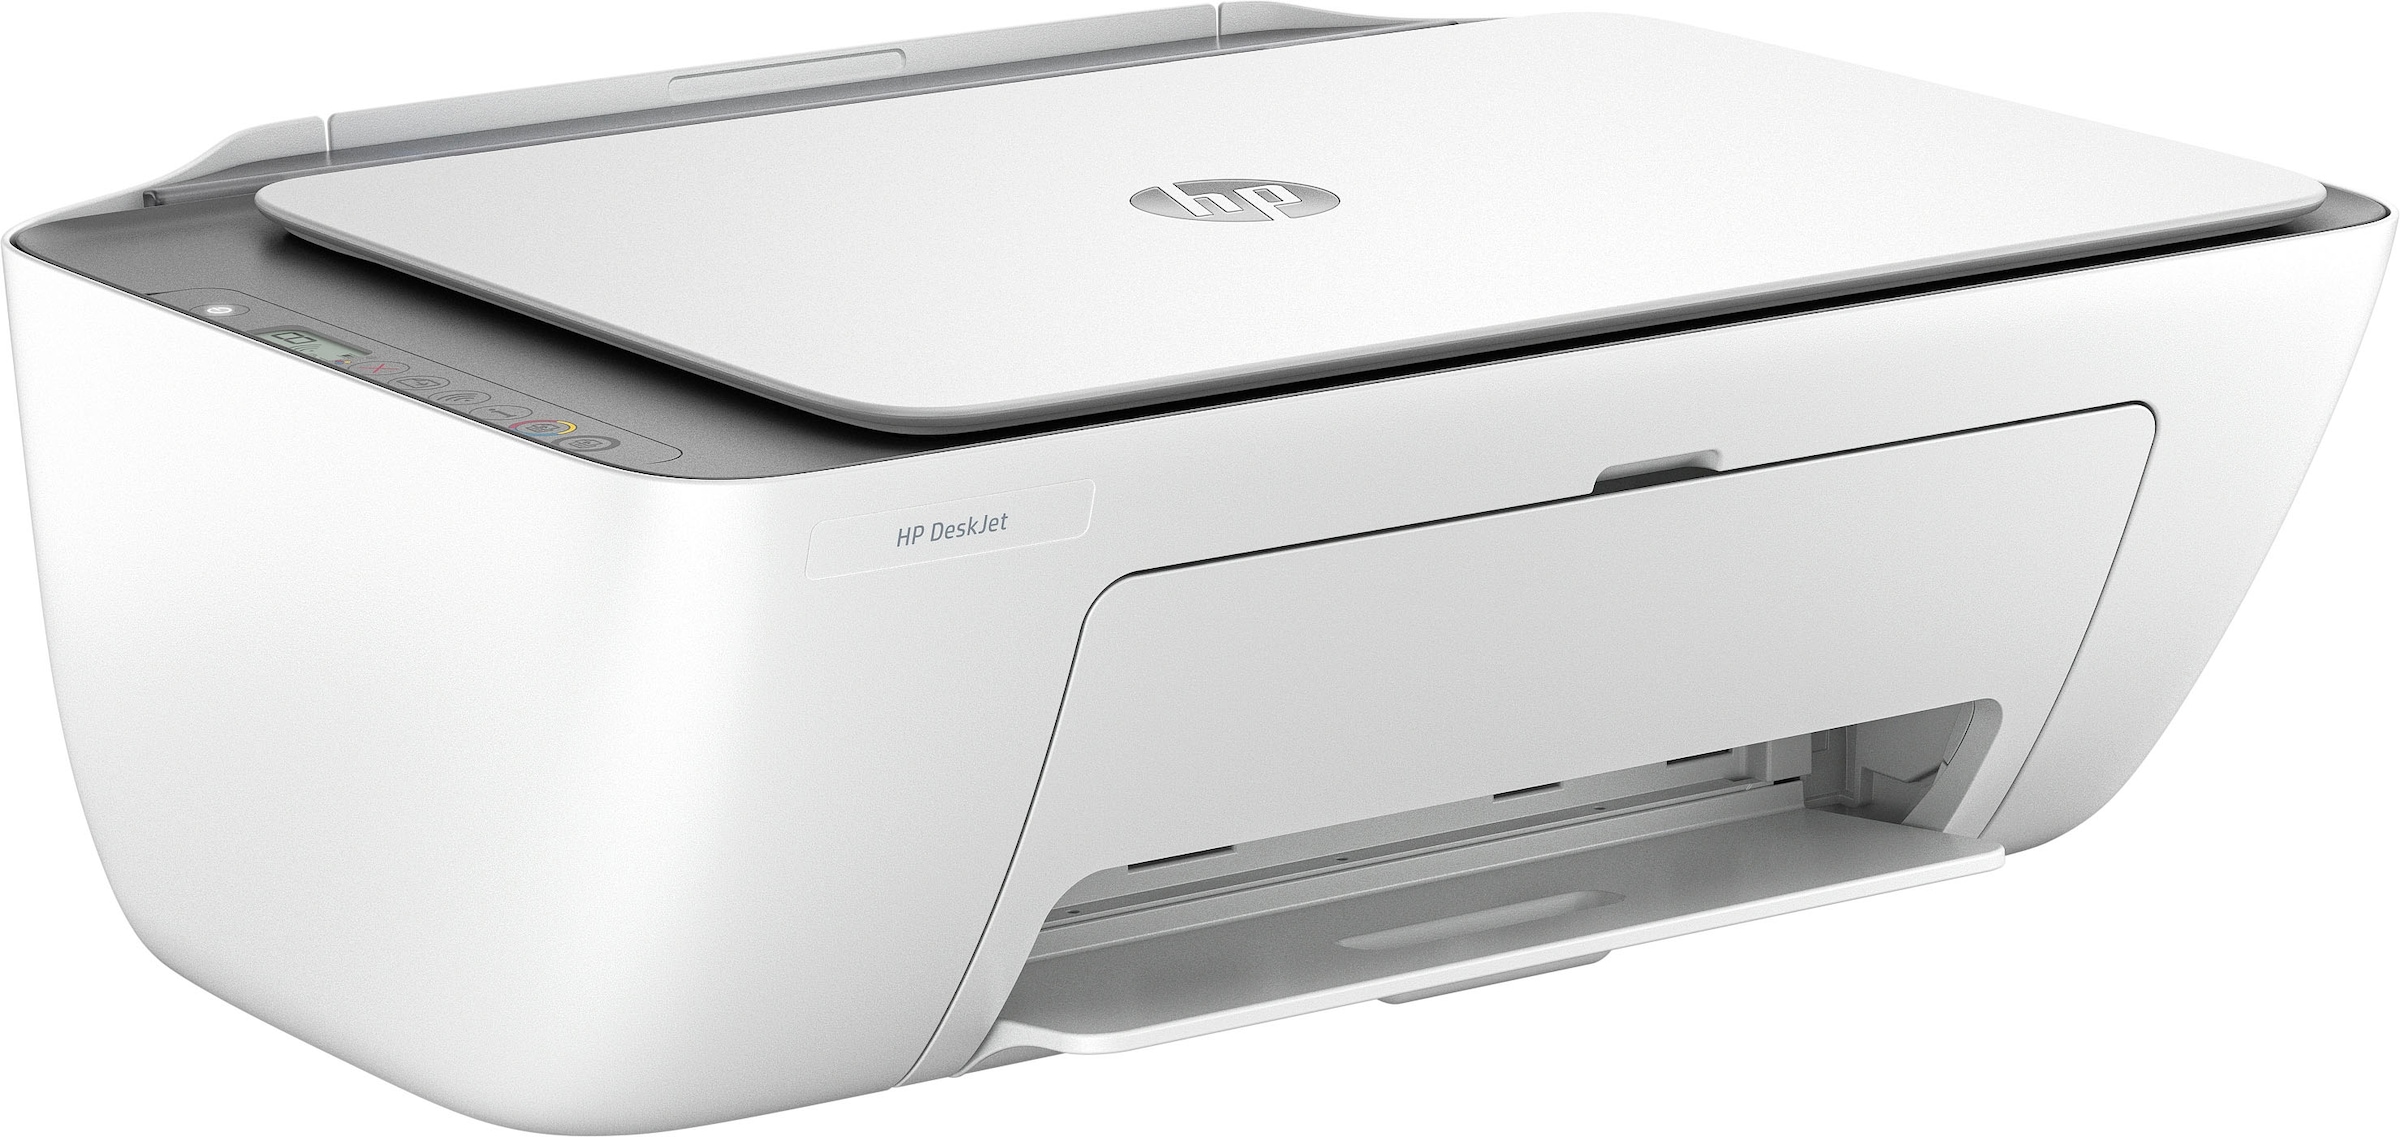 HP Multifunktionsdrucker »DeskJet 2820e«, 3 Monate gratis Drucken mit HP Instant Ink inklusive